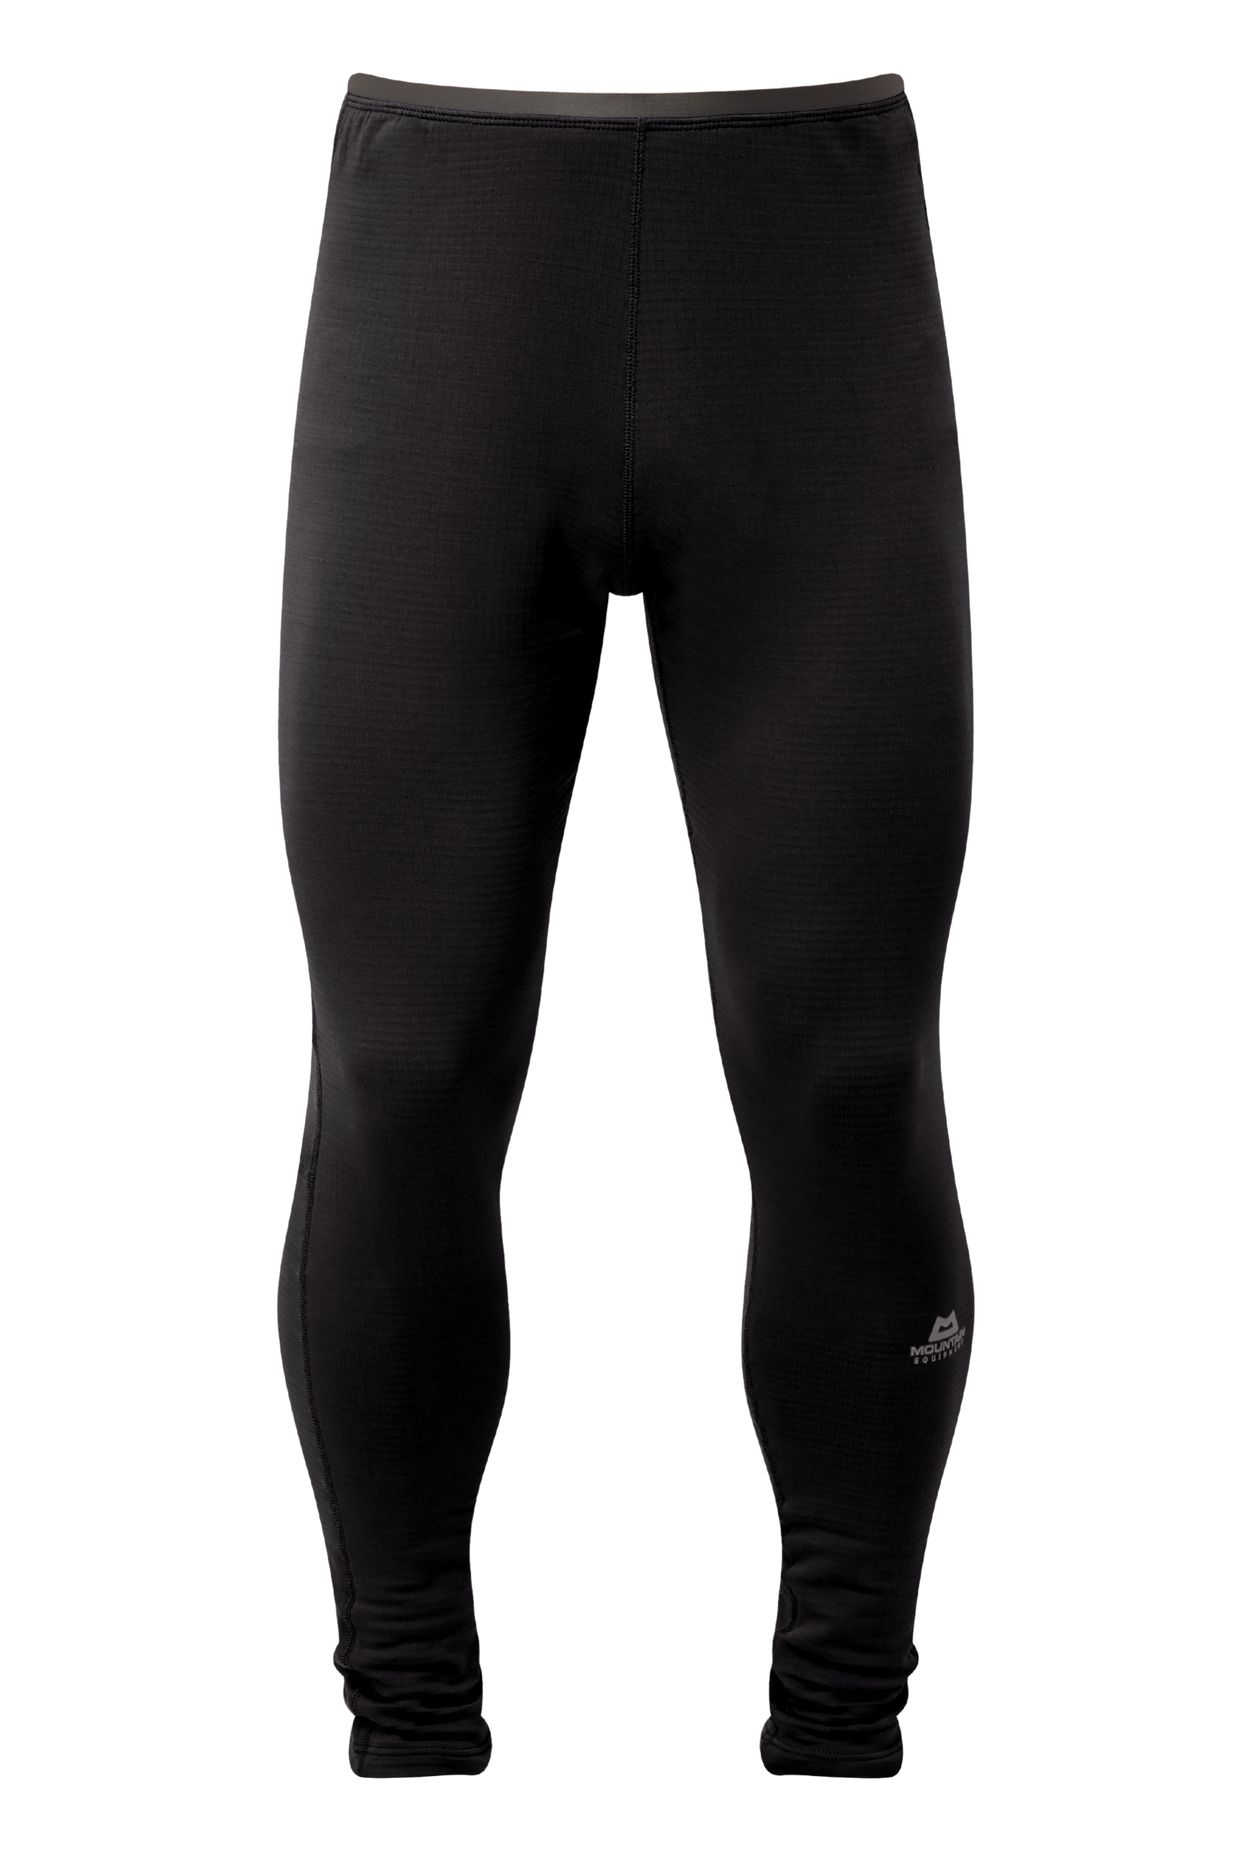 Mountain Equipment pánské fleece kalhoty Eclipse Pant Barva: black, Velikost: XS